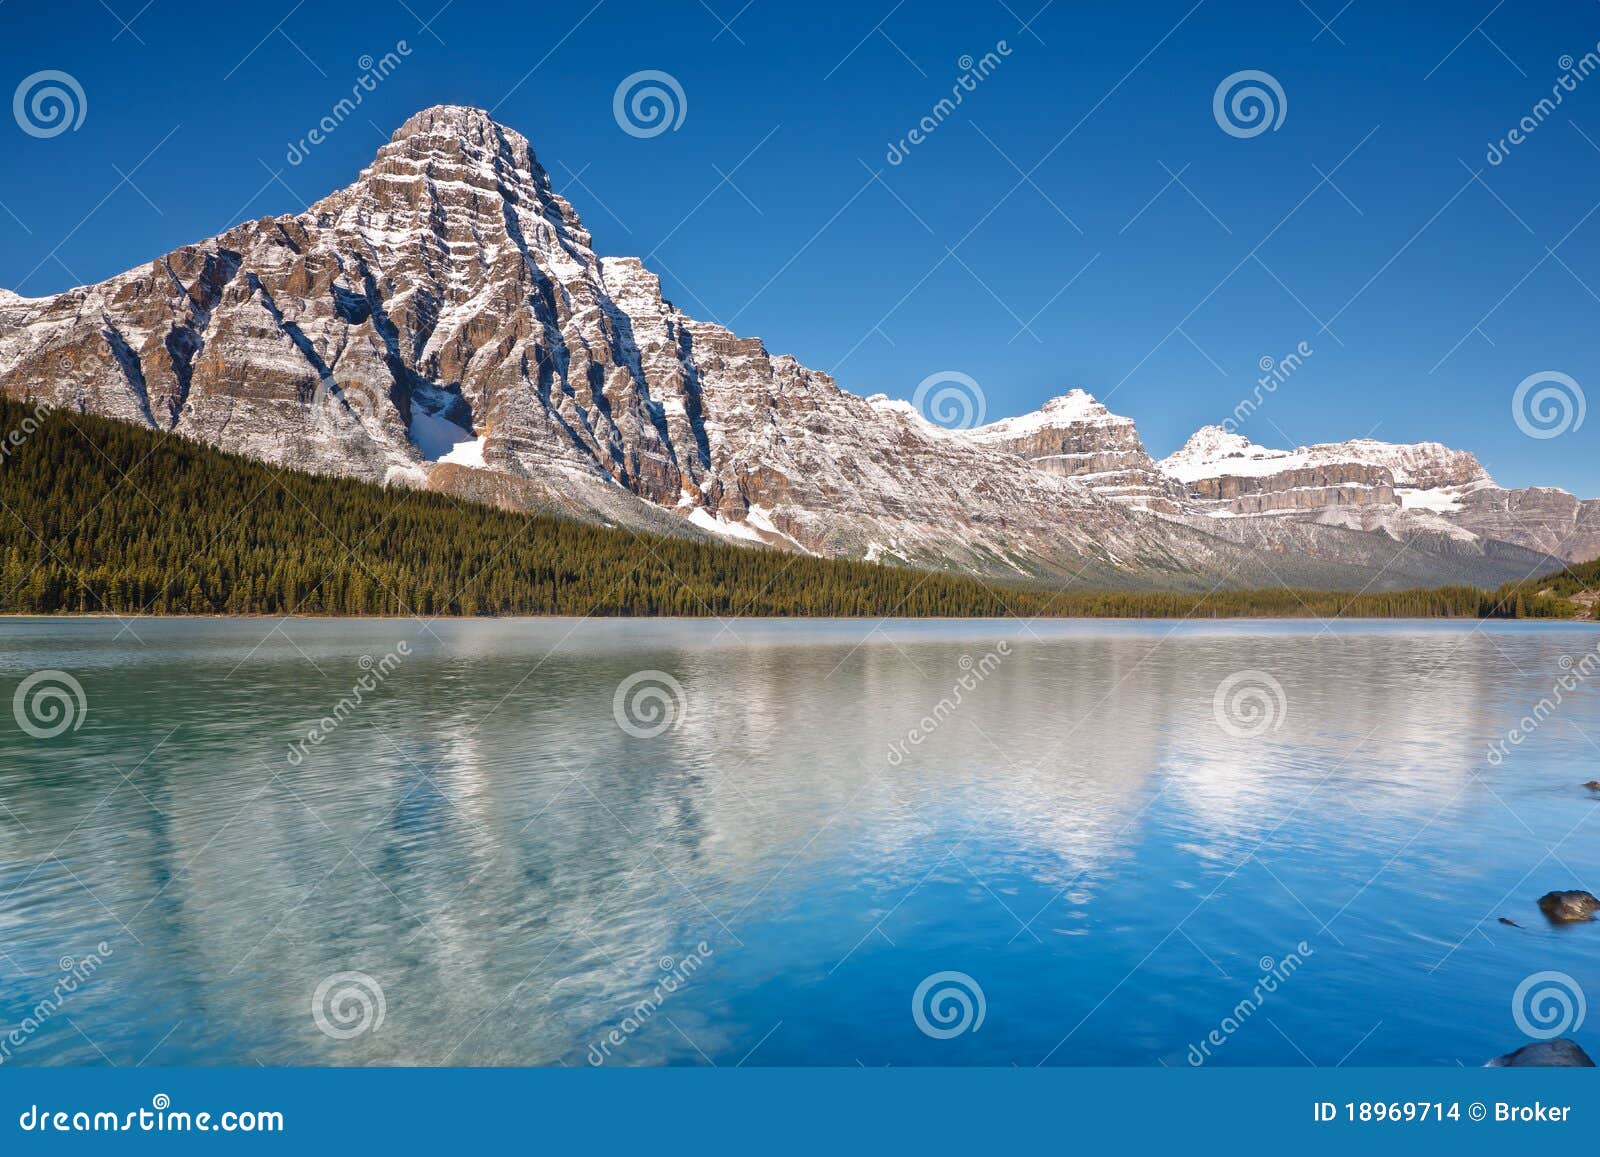 mount chephren and waterfowl lake, canada